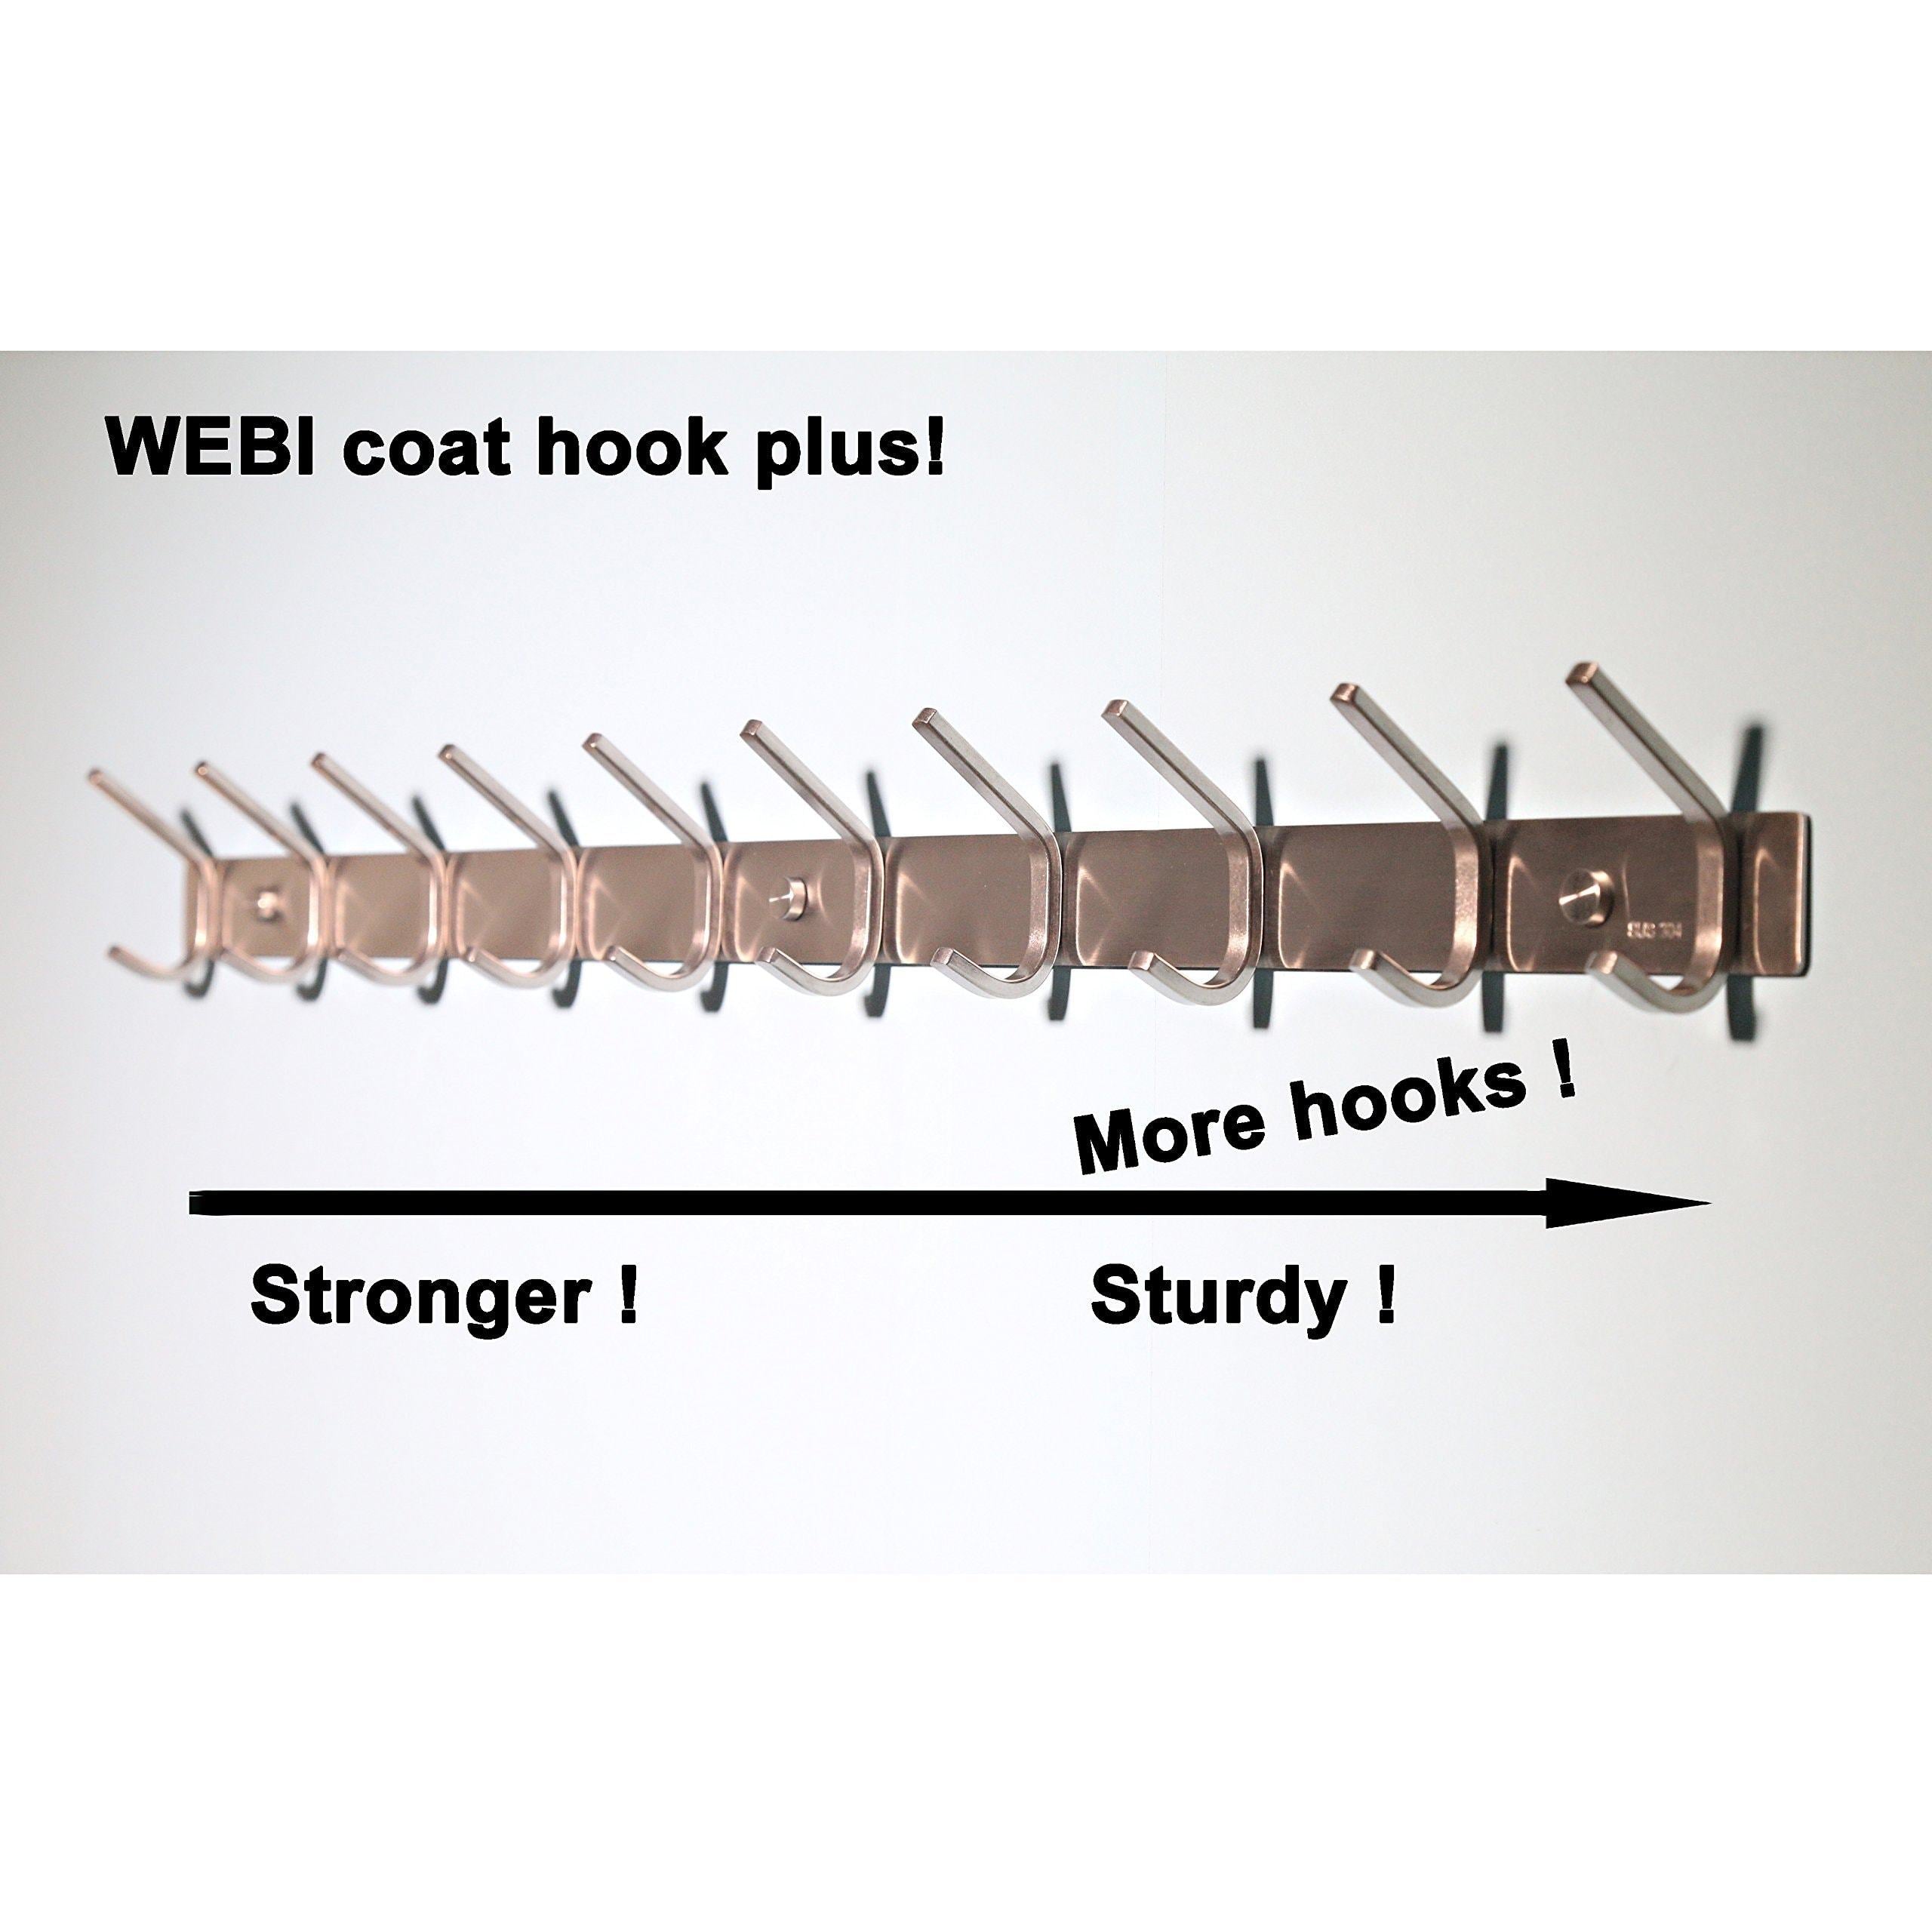 Top rated 10 hooks webi heavy duty stainless steel 304 hook rail coat rack with 10 hooks satin finish great home storage organization for bedroom bathroom foyers hallways 2packs